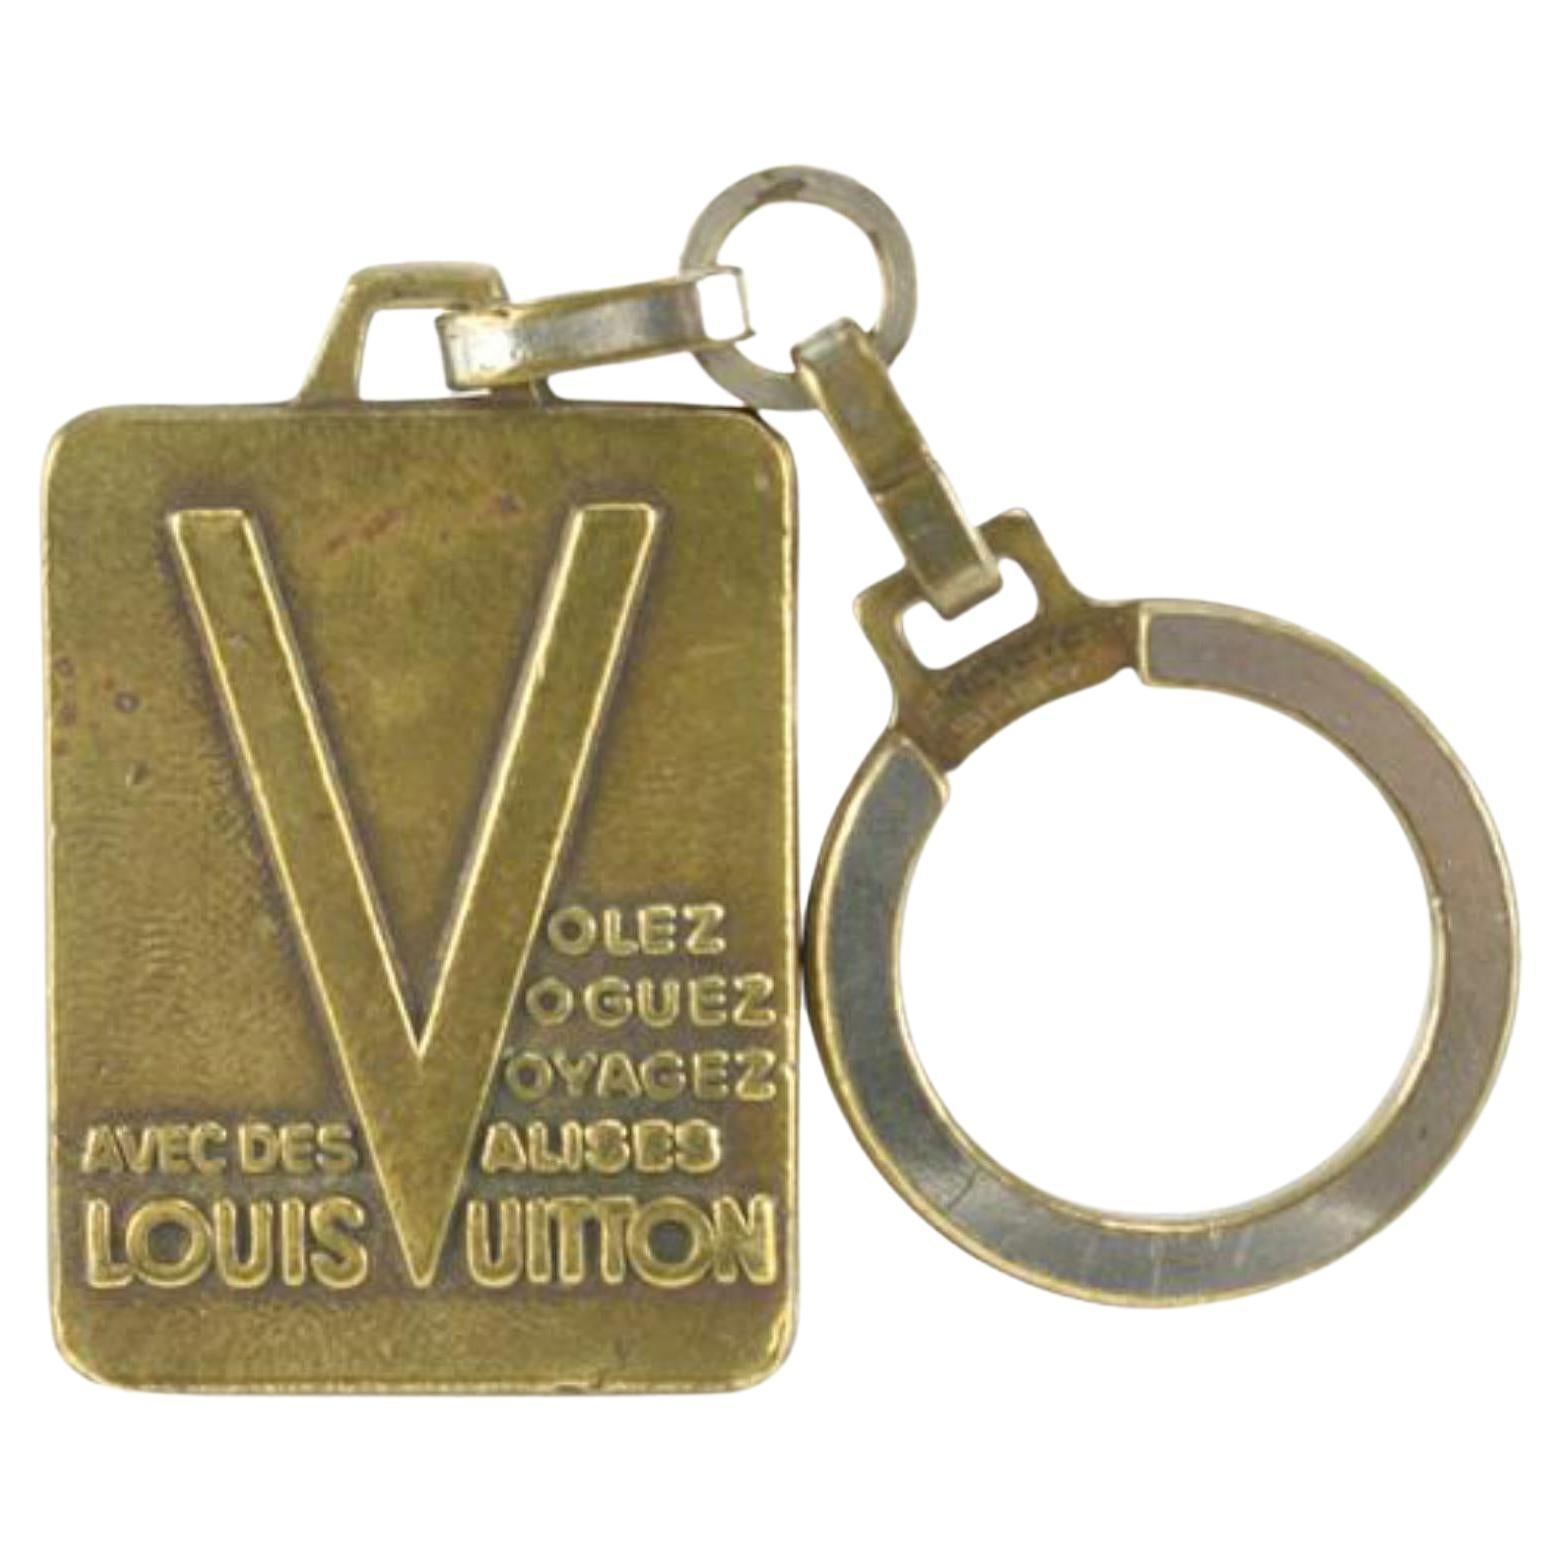 Gaston V Louis Vuitton - 8 For Sale on 1stDibs